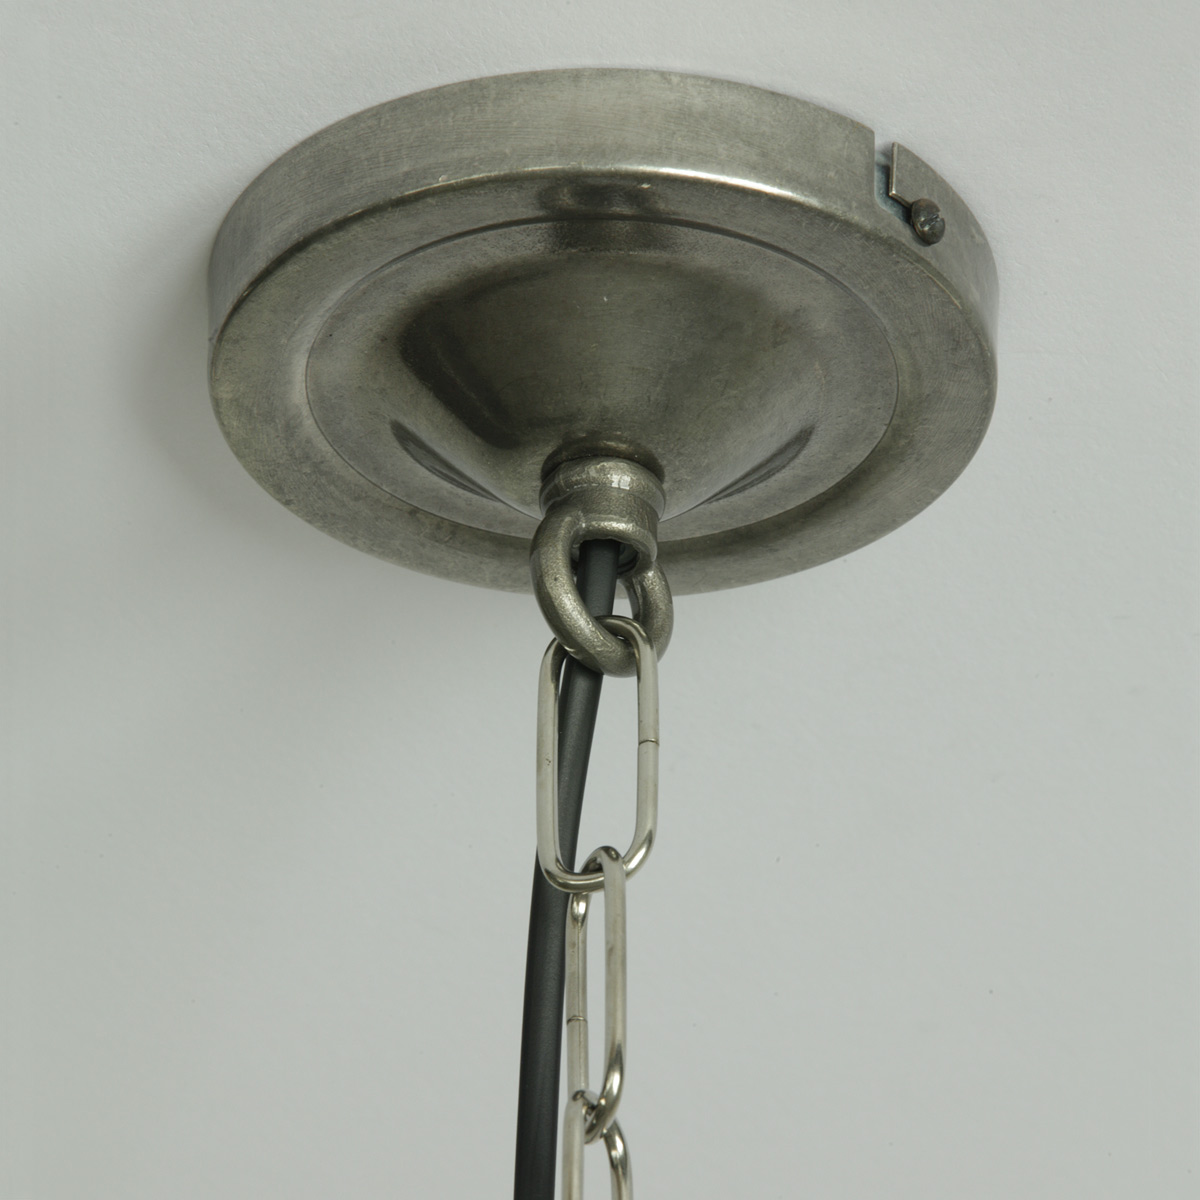 Nostalgische Schiffslampe an Kettenaufhängung: Deckenteil zur Kettenaufhängung, alt-silbern patiniert, Ø 10 cm